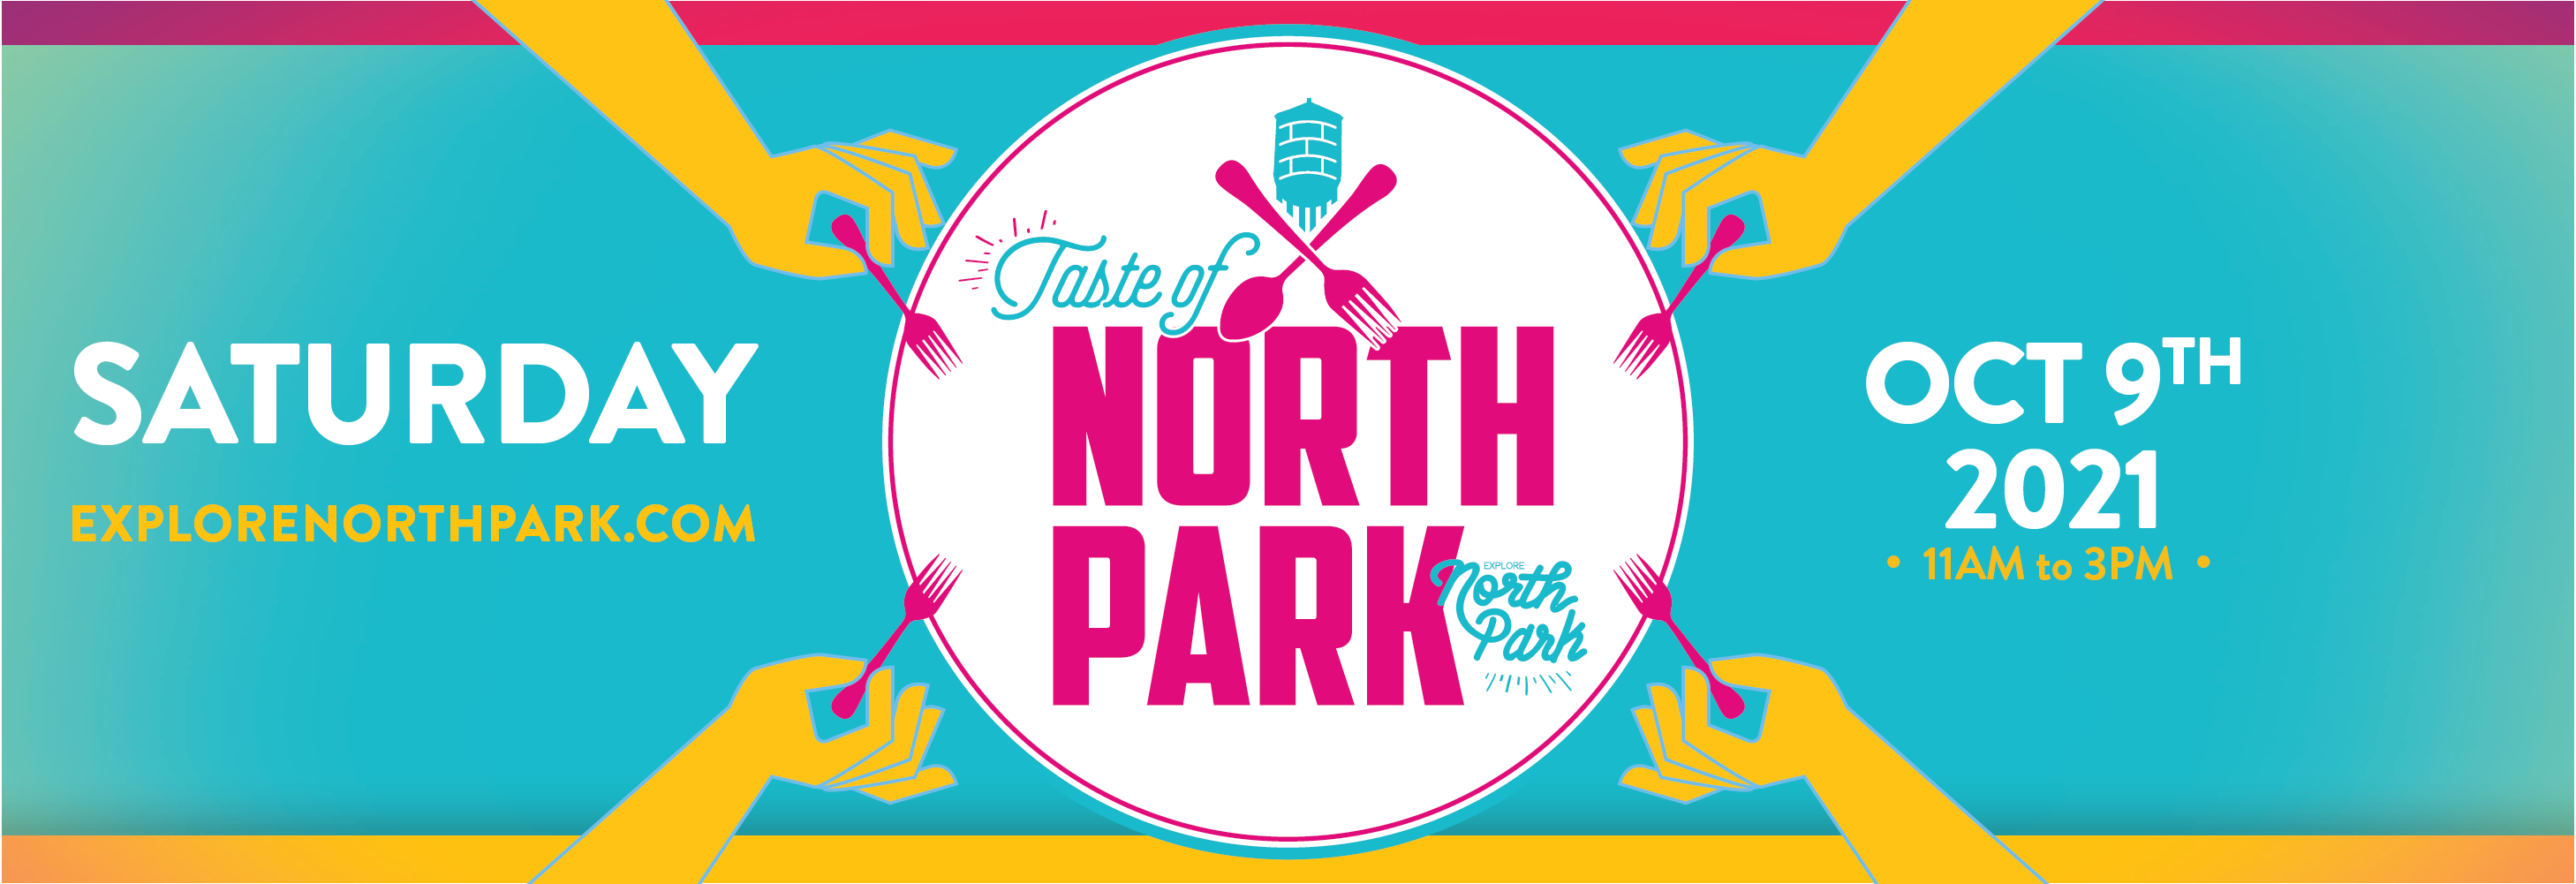 Taste of North Park Event North Park Main Street